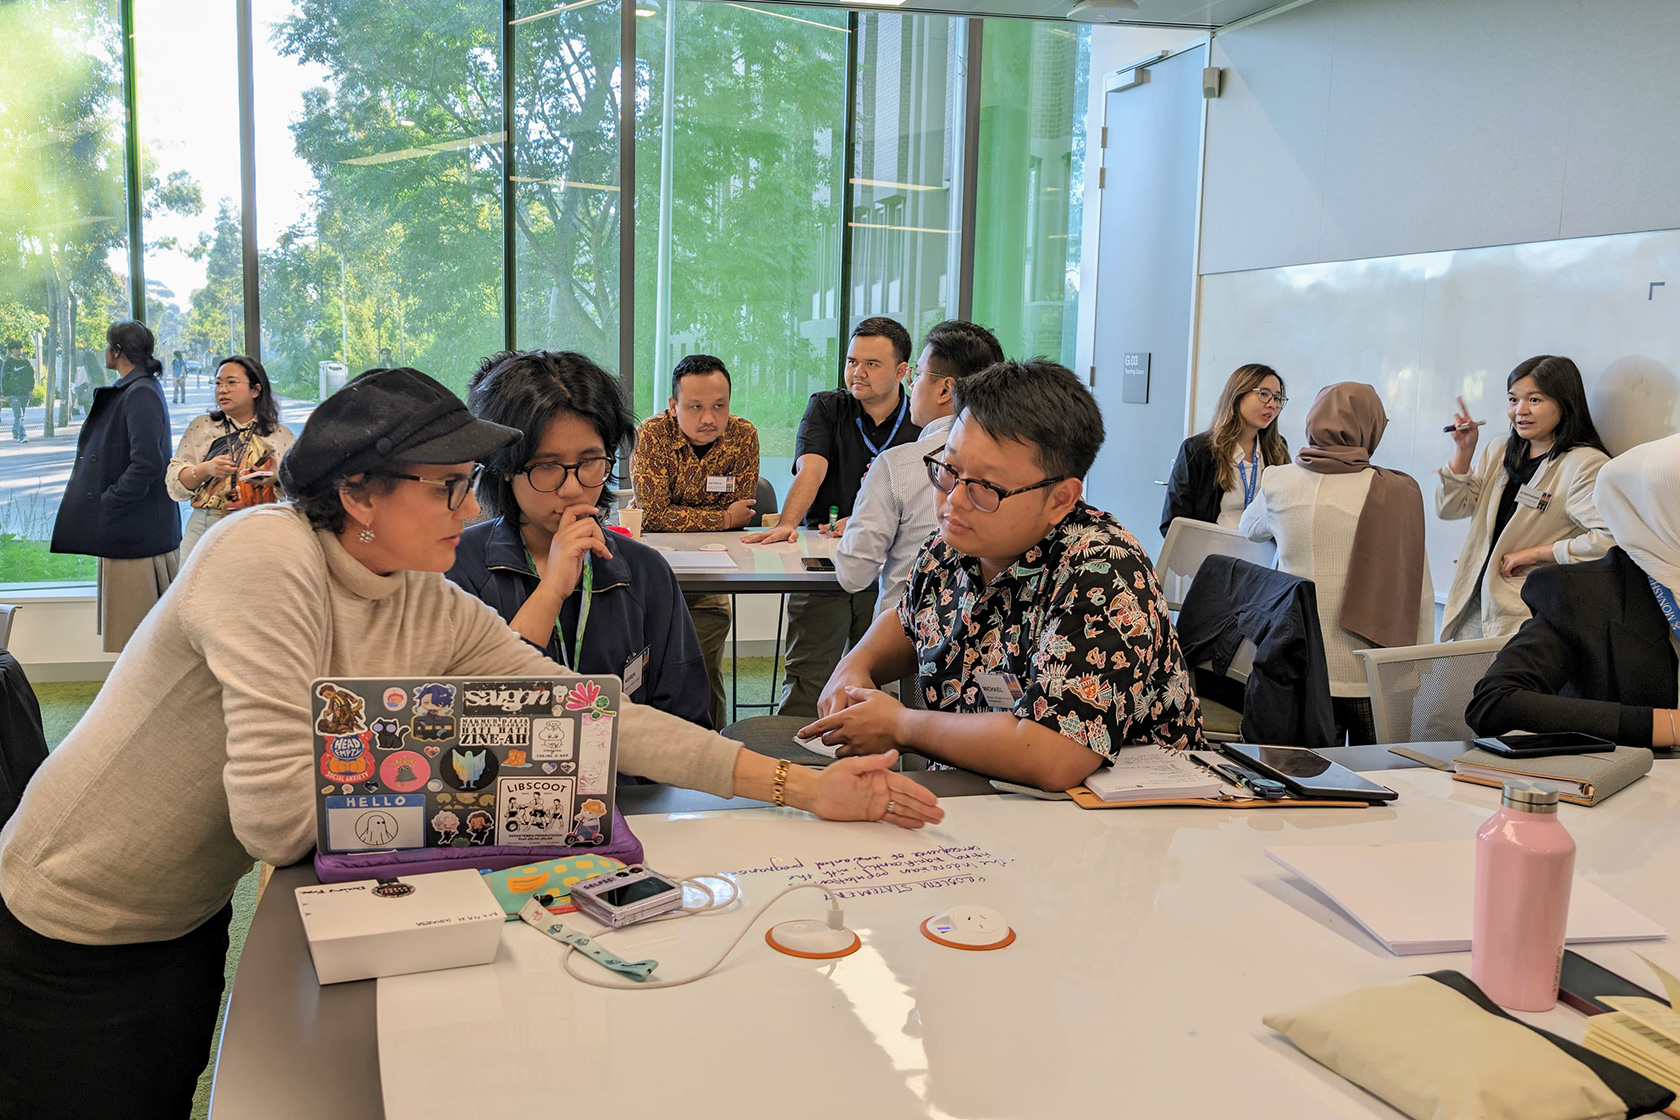 Nusantara scholars engage in enlightening discussion during the interactive workshop.